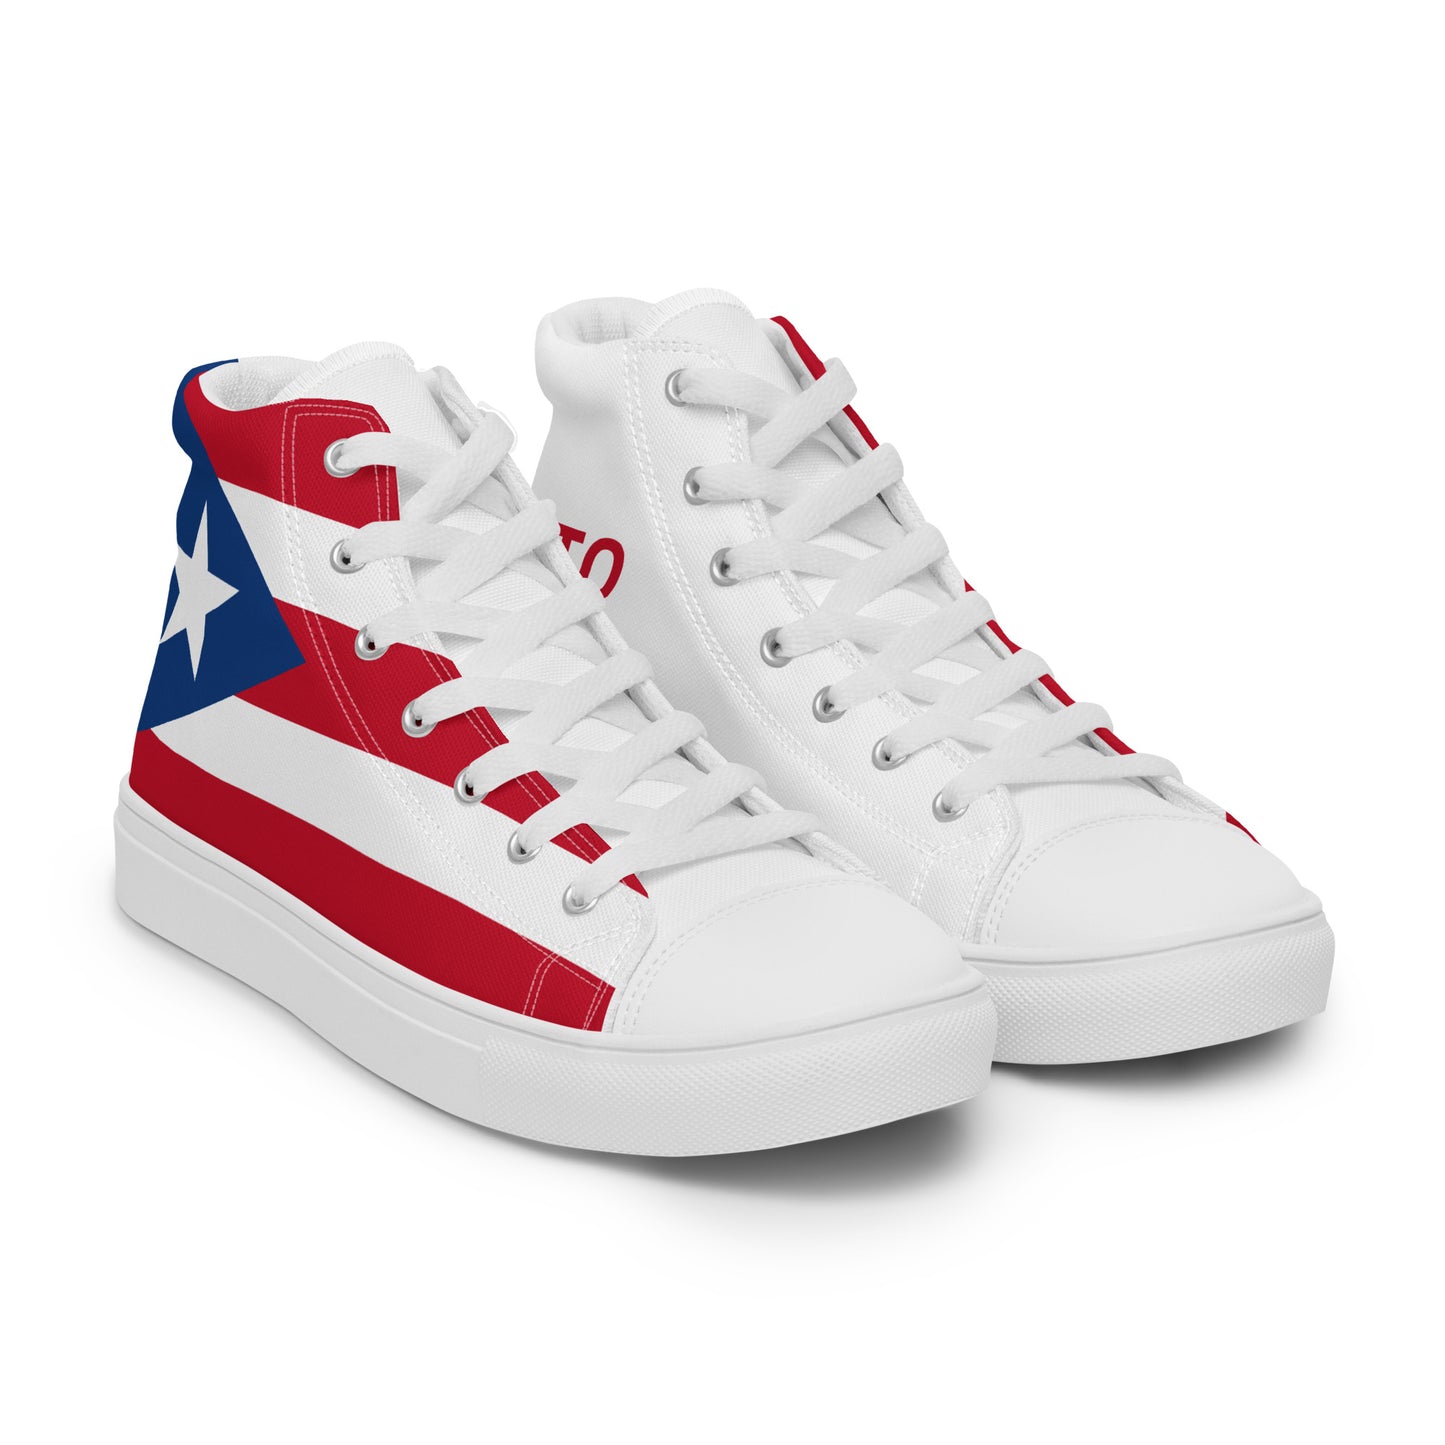 Puerto Rico - Mujer - Bandera - Zapatos High top